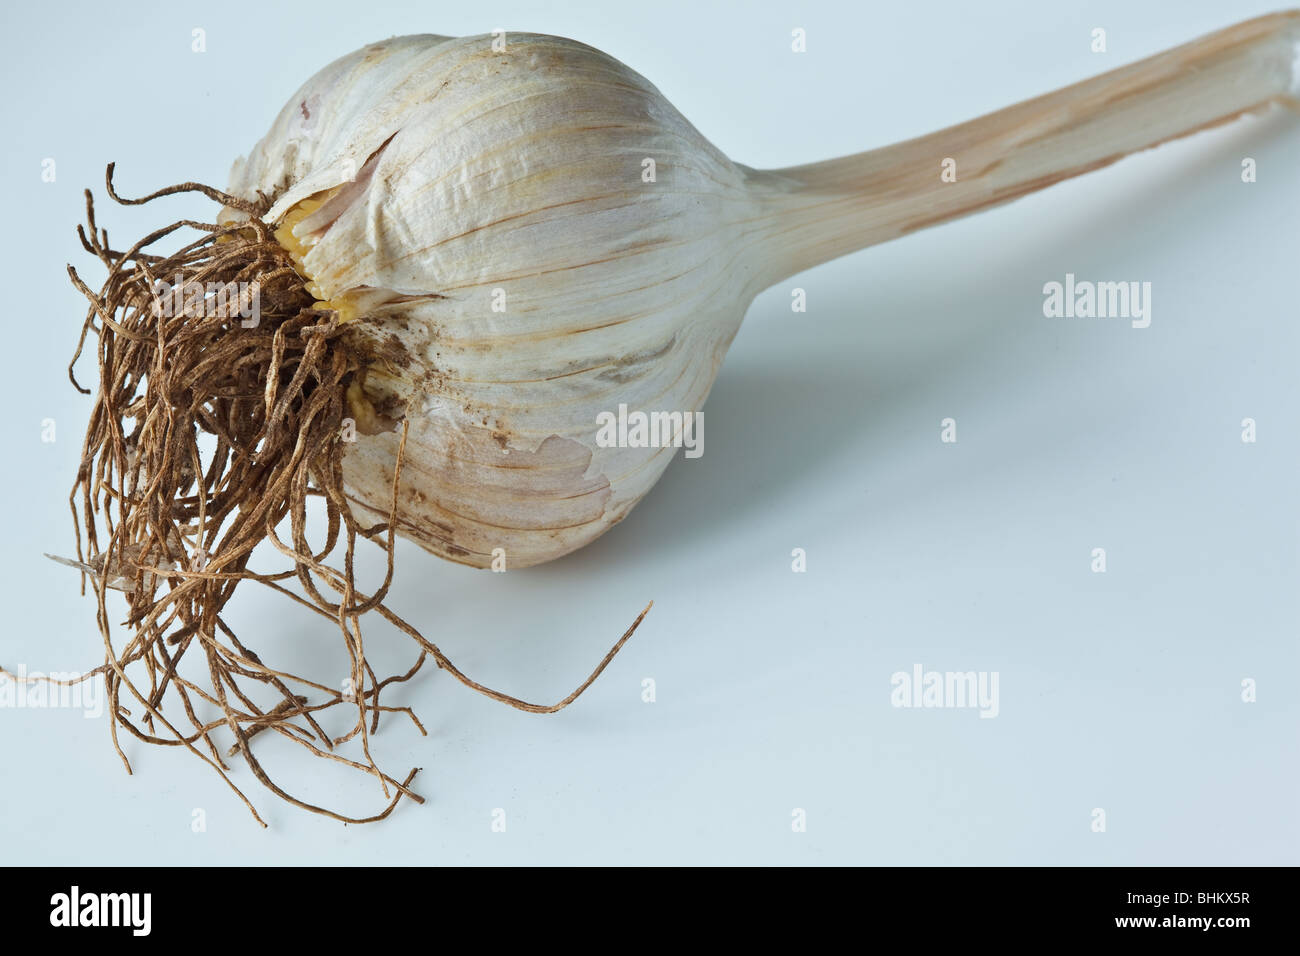 Close-up image of a garlic bulb Stock Photo